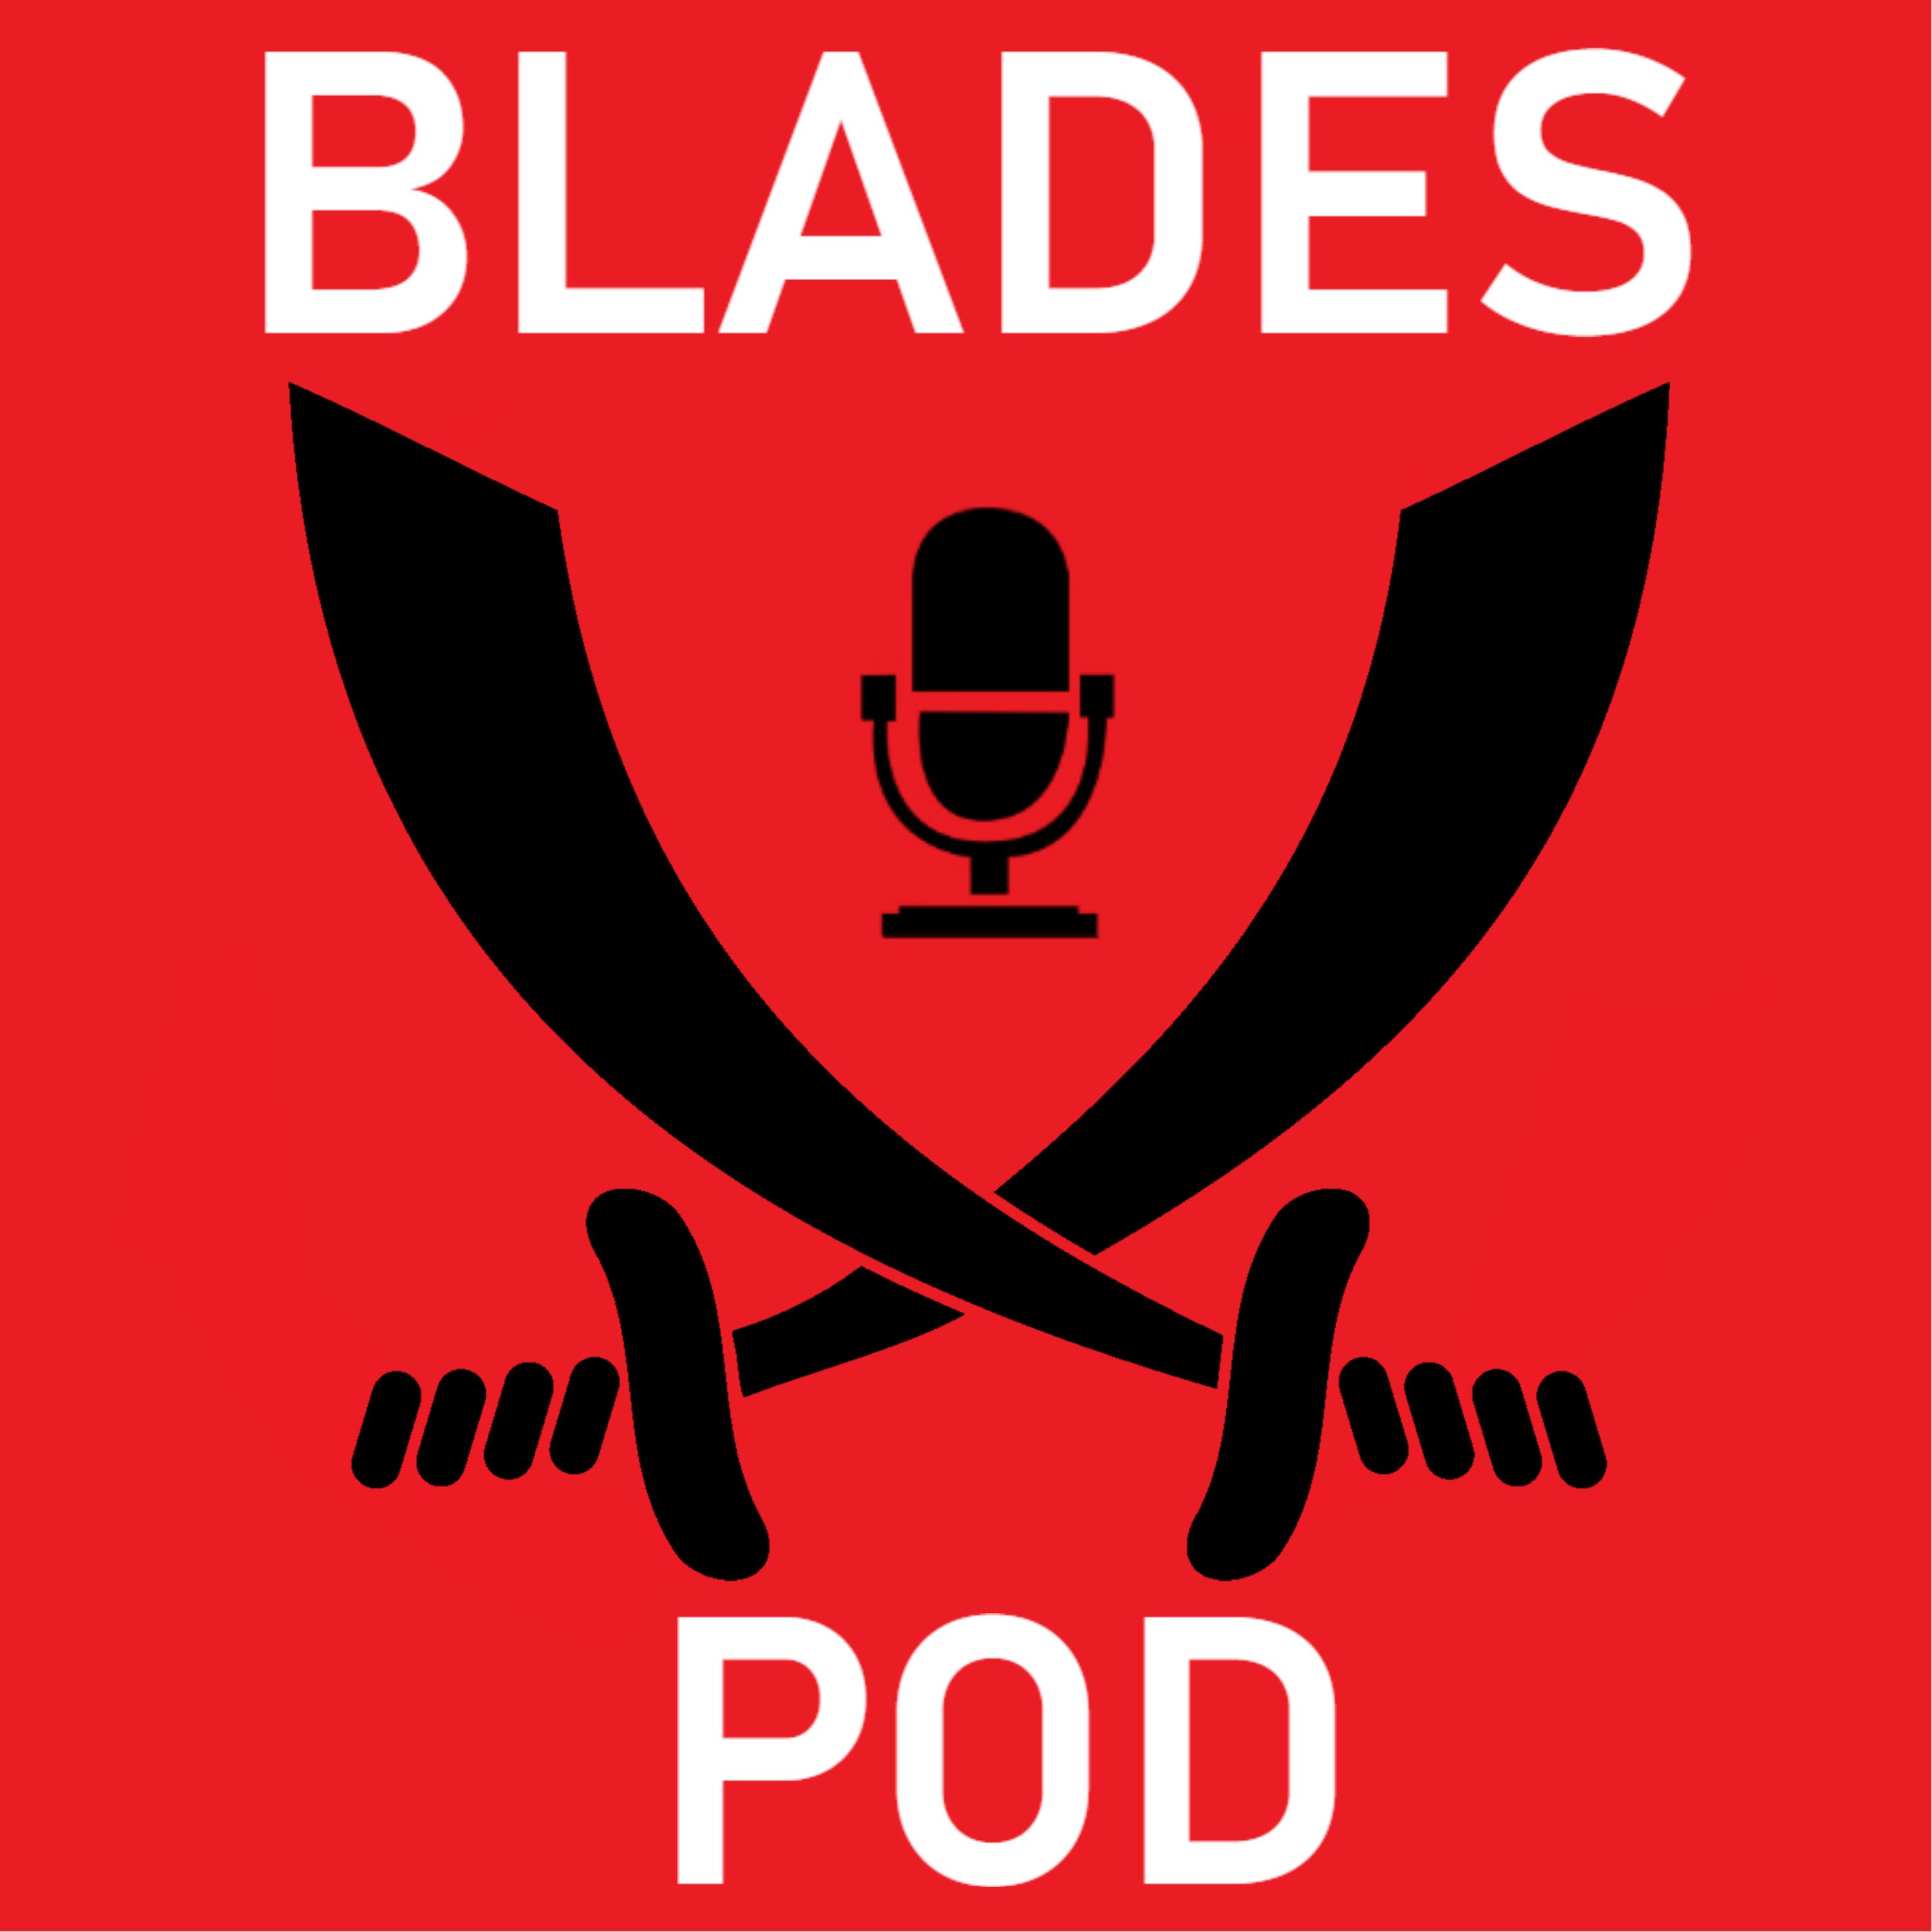 BladesPod - The Sheffield United Podcast